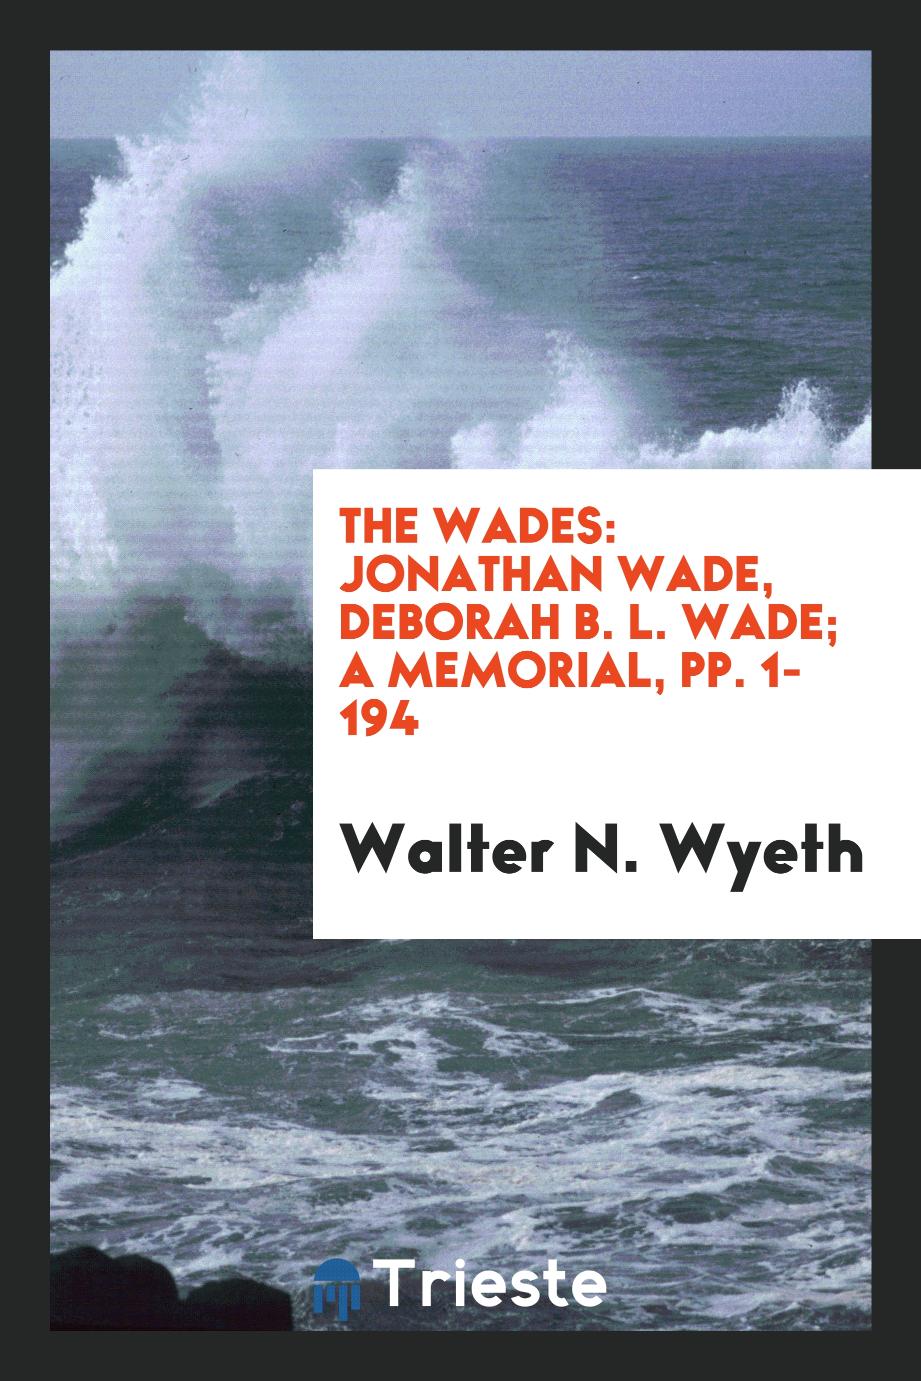 The Wades: Jonathan Wade, Deborah B. L. Wade; A Memorial, pp. 1-194